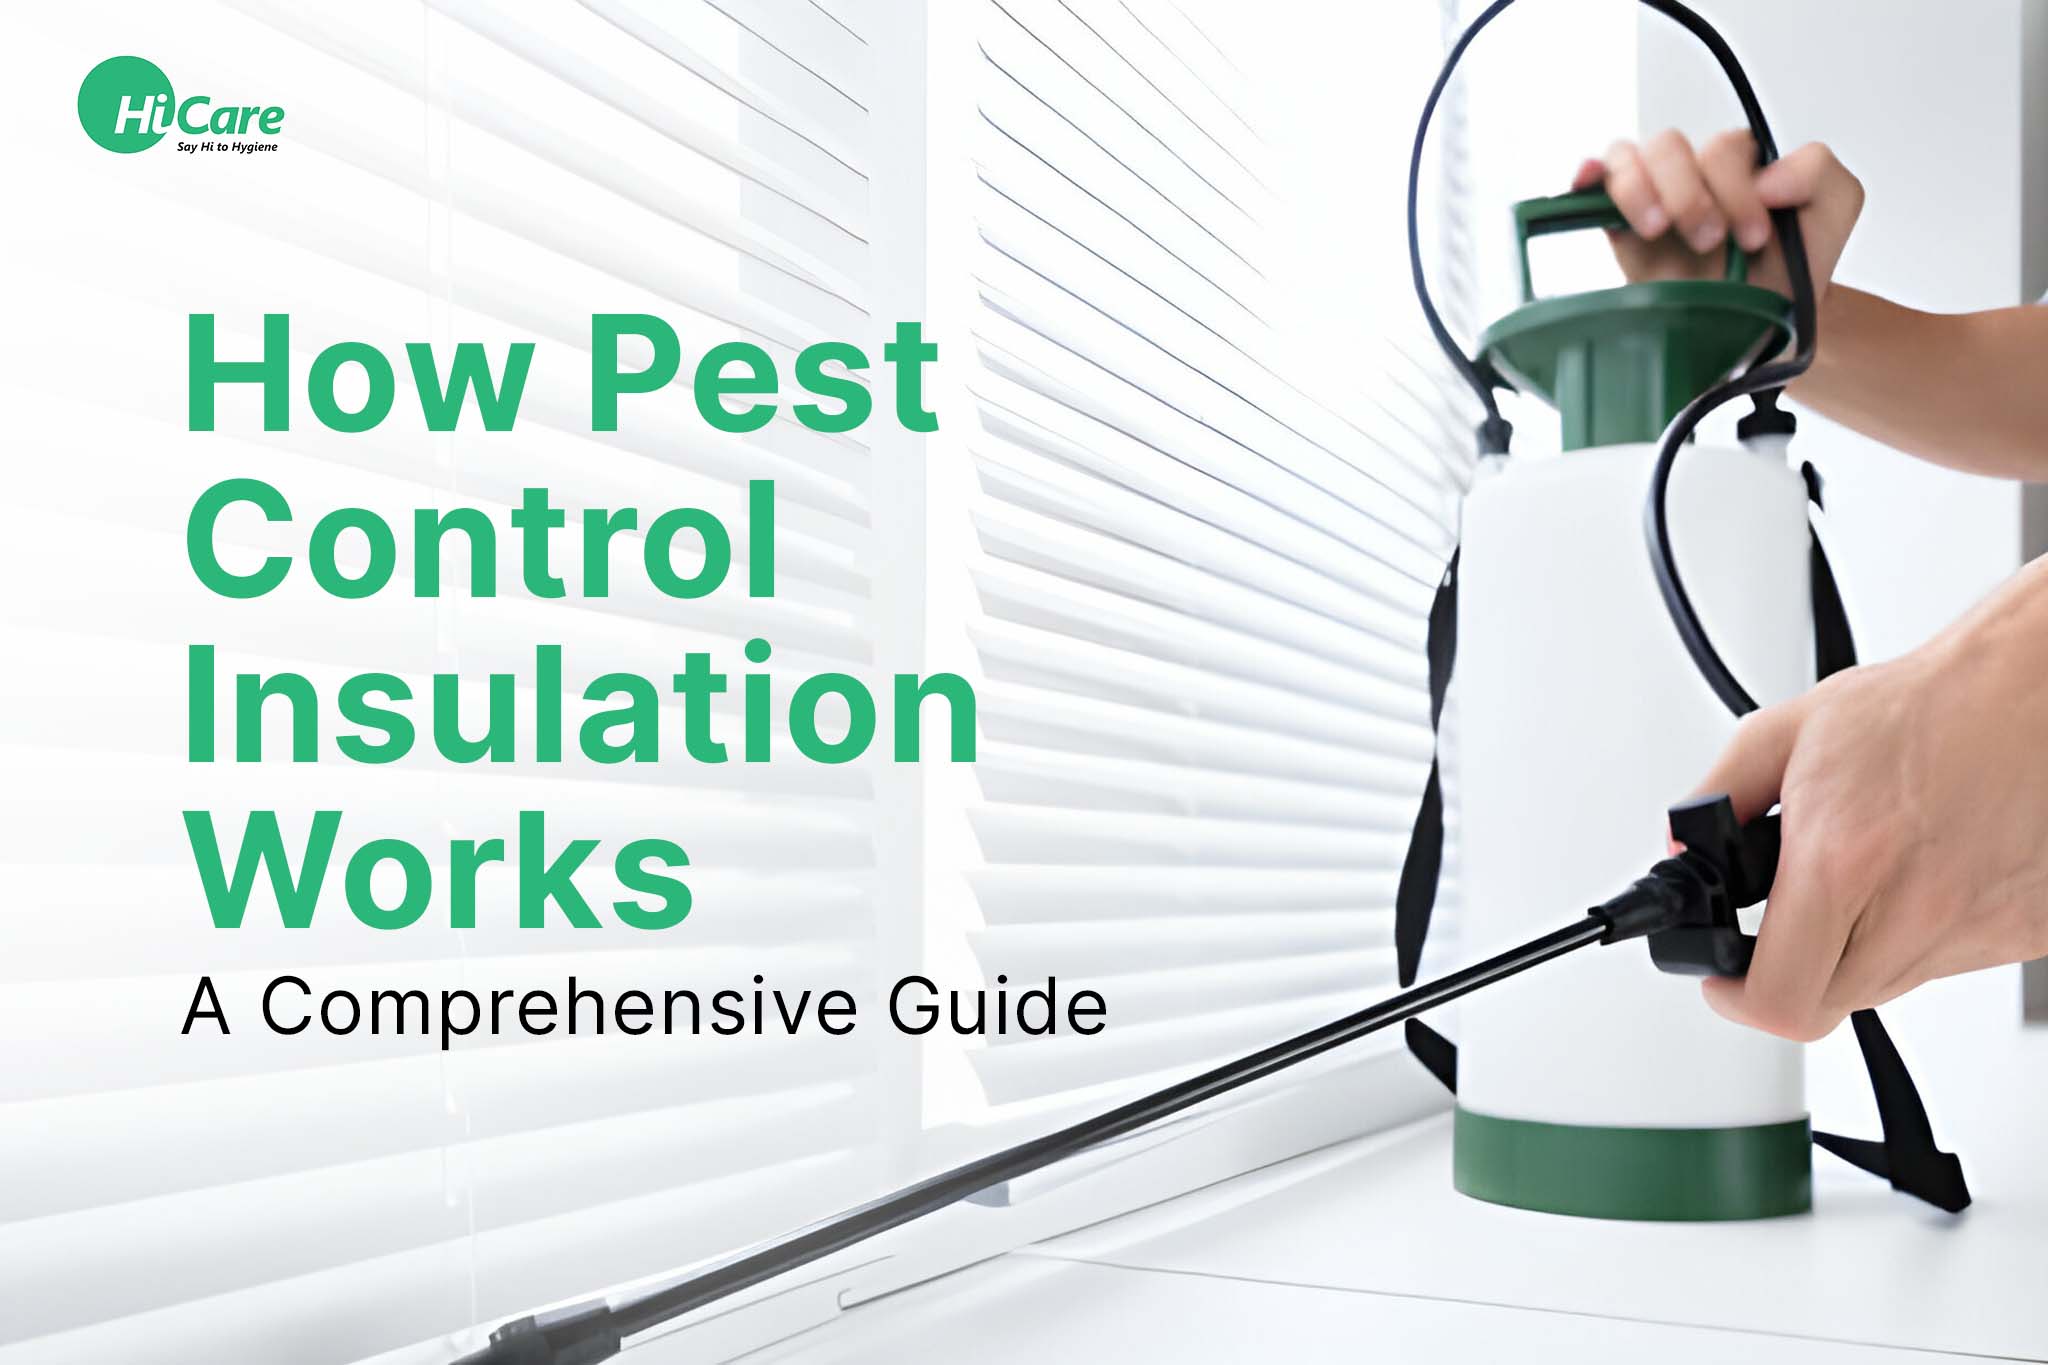 How Pest Control Insulation Works: A Comprehensive Guide